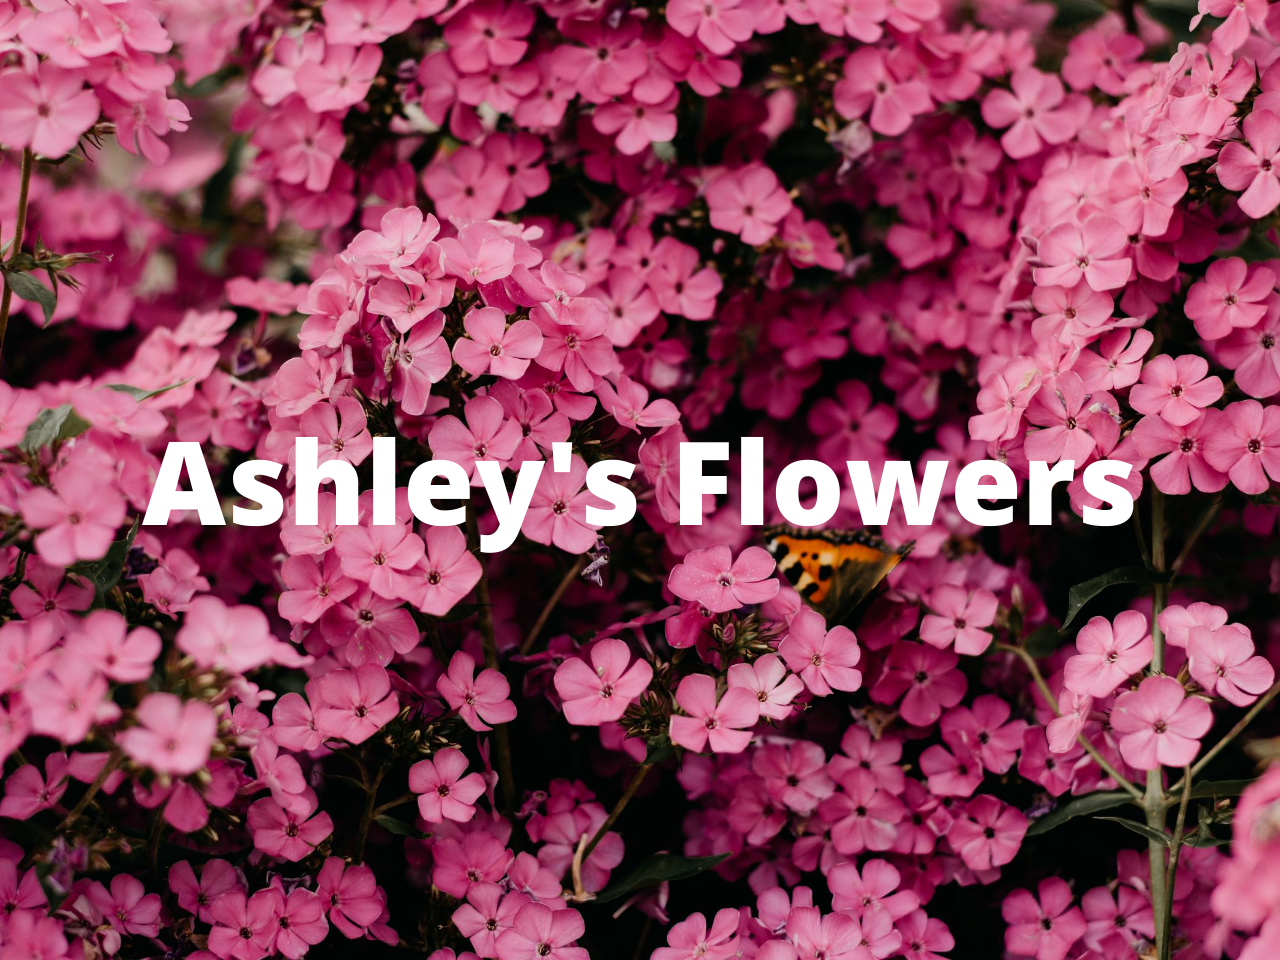 Ashley's Flowers